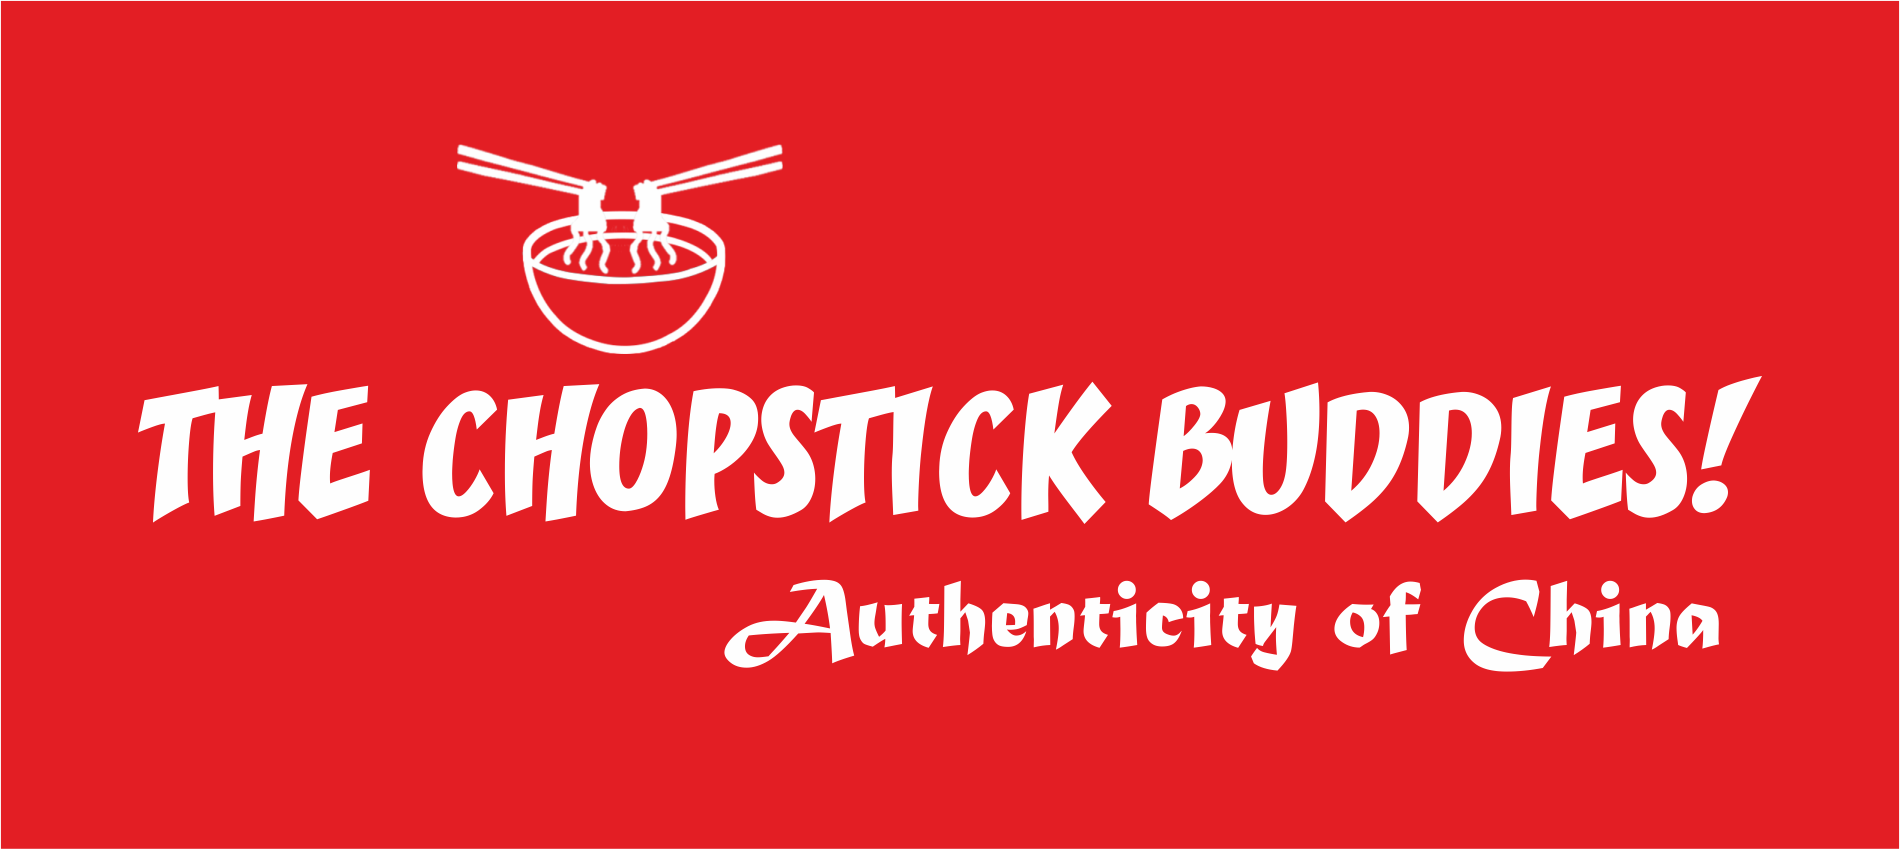 The Chopstick Buddies